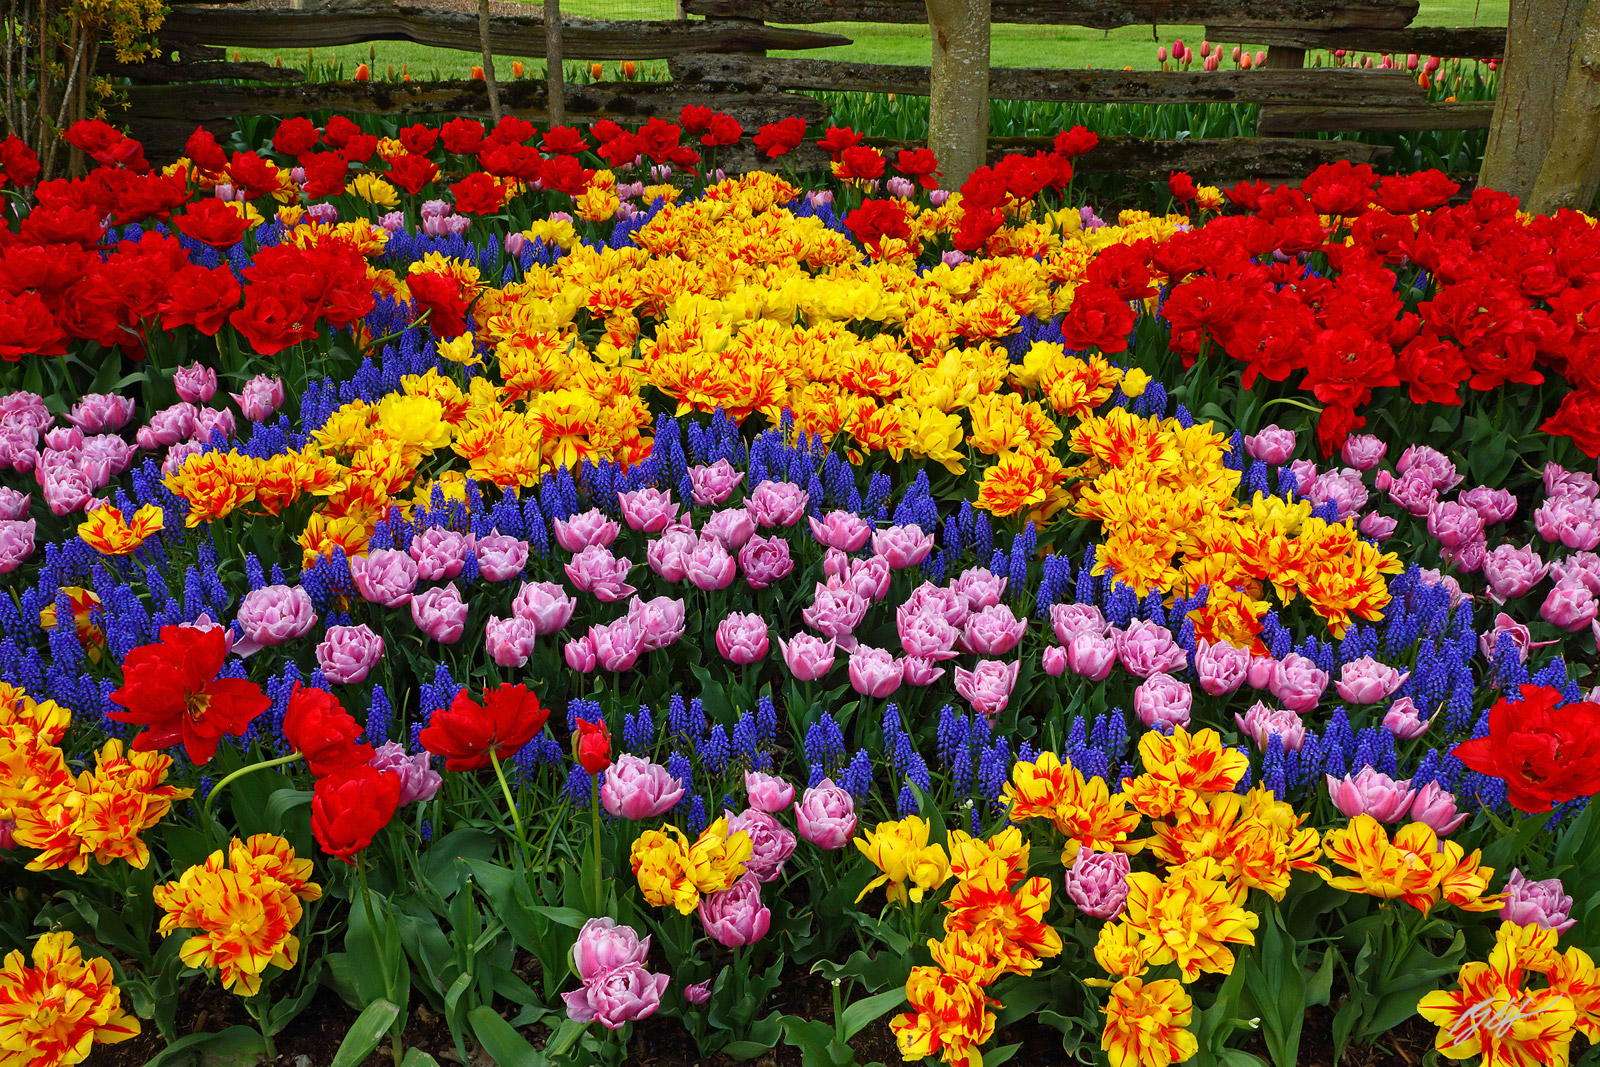 Designs in the Tulips in Roozengaarde Garden in Skagit Valley in Washington